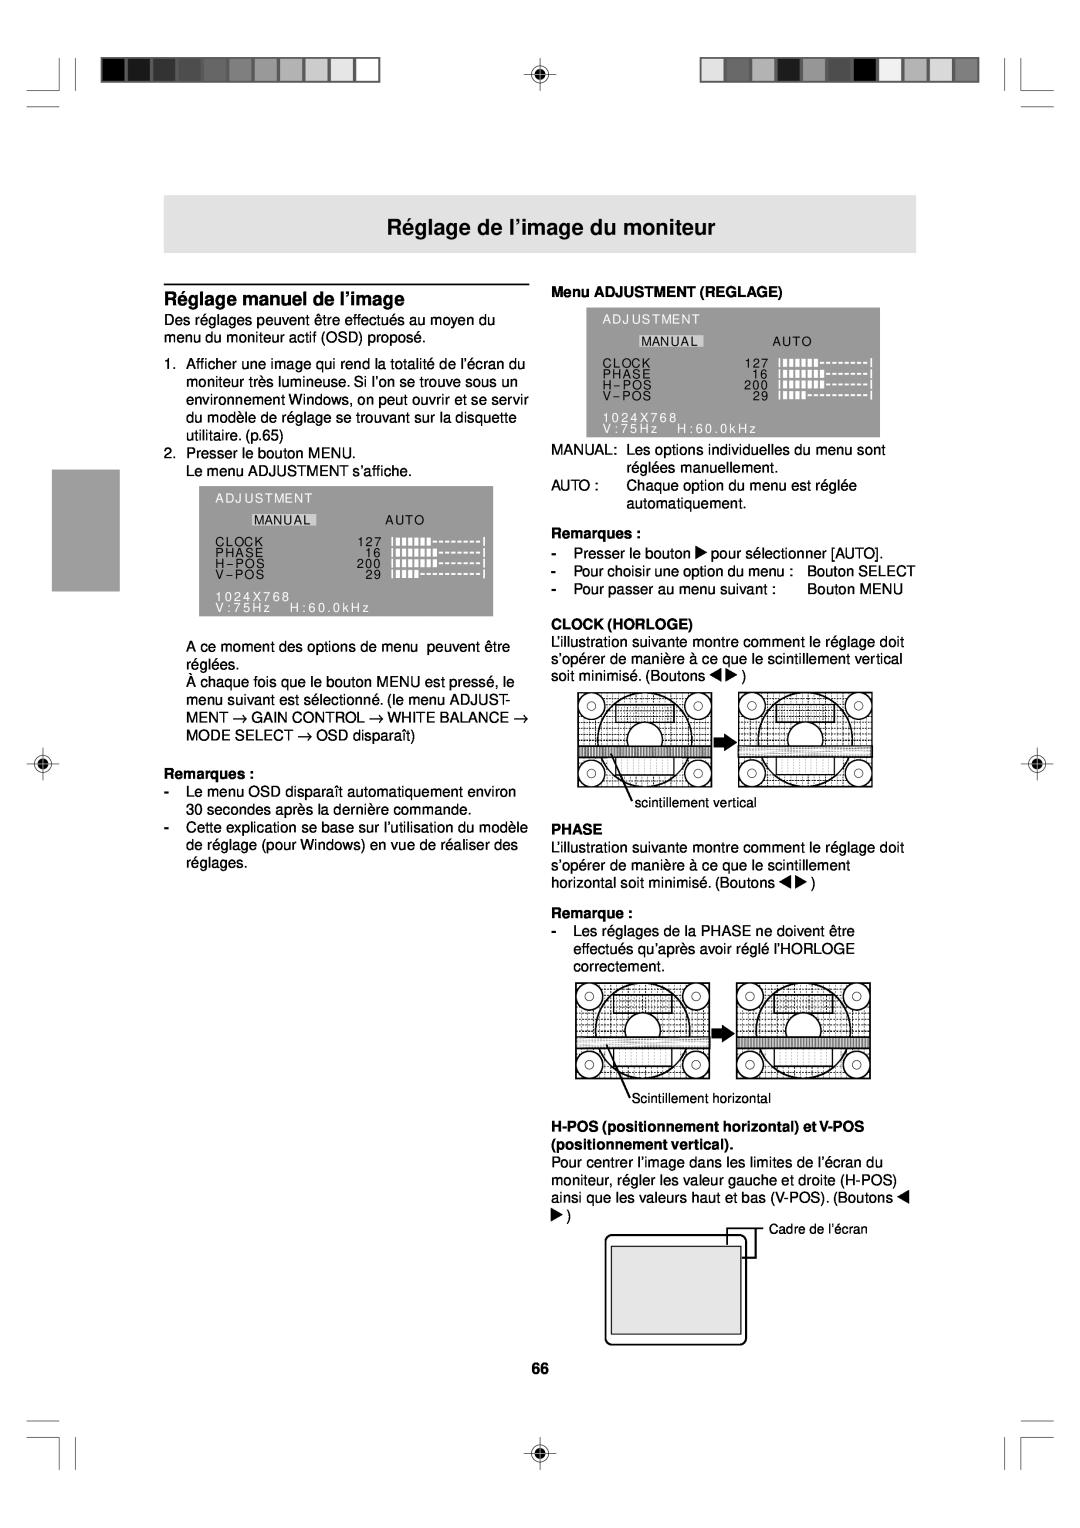 Sharp LL-T15V1 Réglage manuel de l’image, Menu ADJUSTMENT REGLAGE, Clock Horloge, Réglage de l’image du moniteur, Phase 